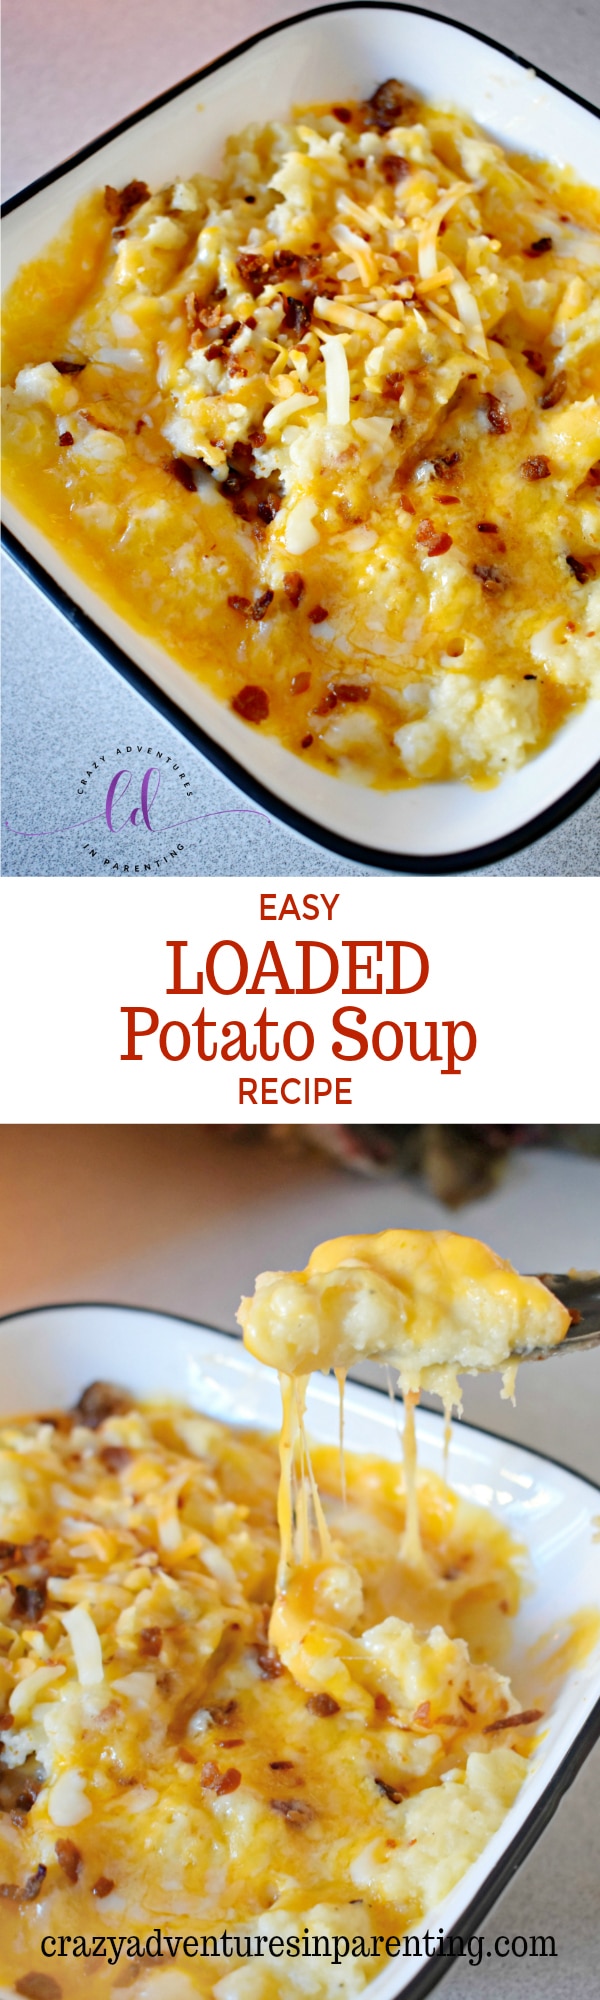 Easy Loaded Potato Soup Recipe